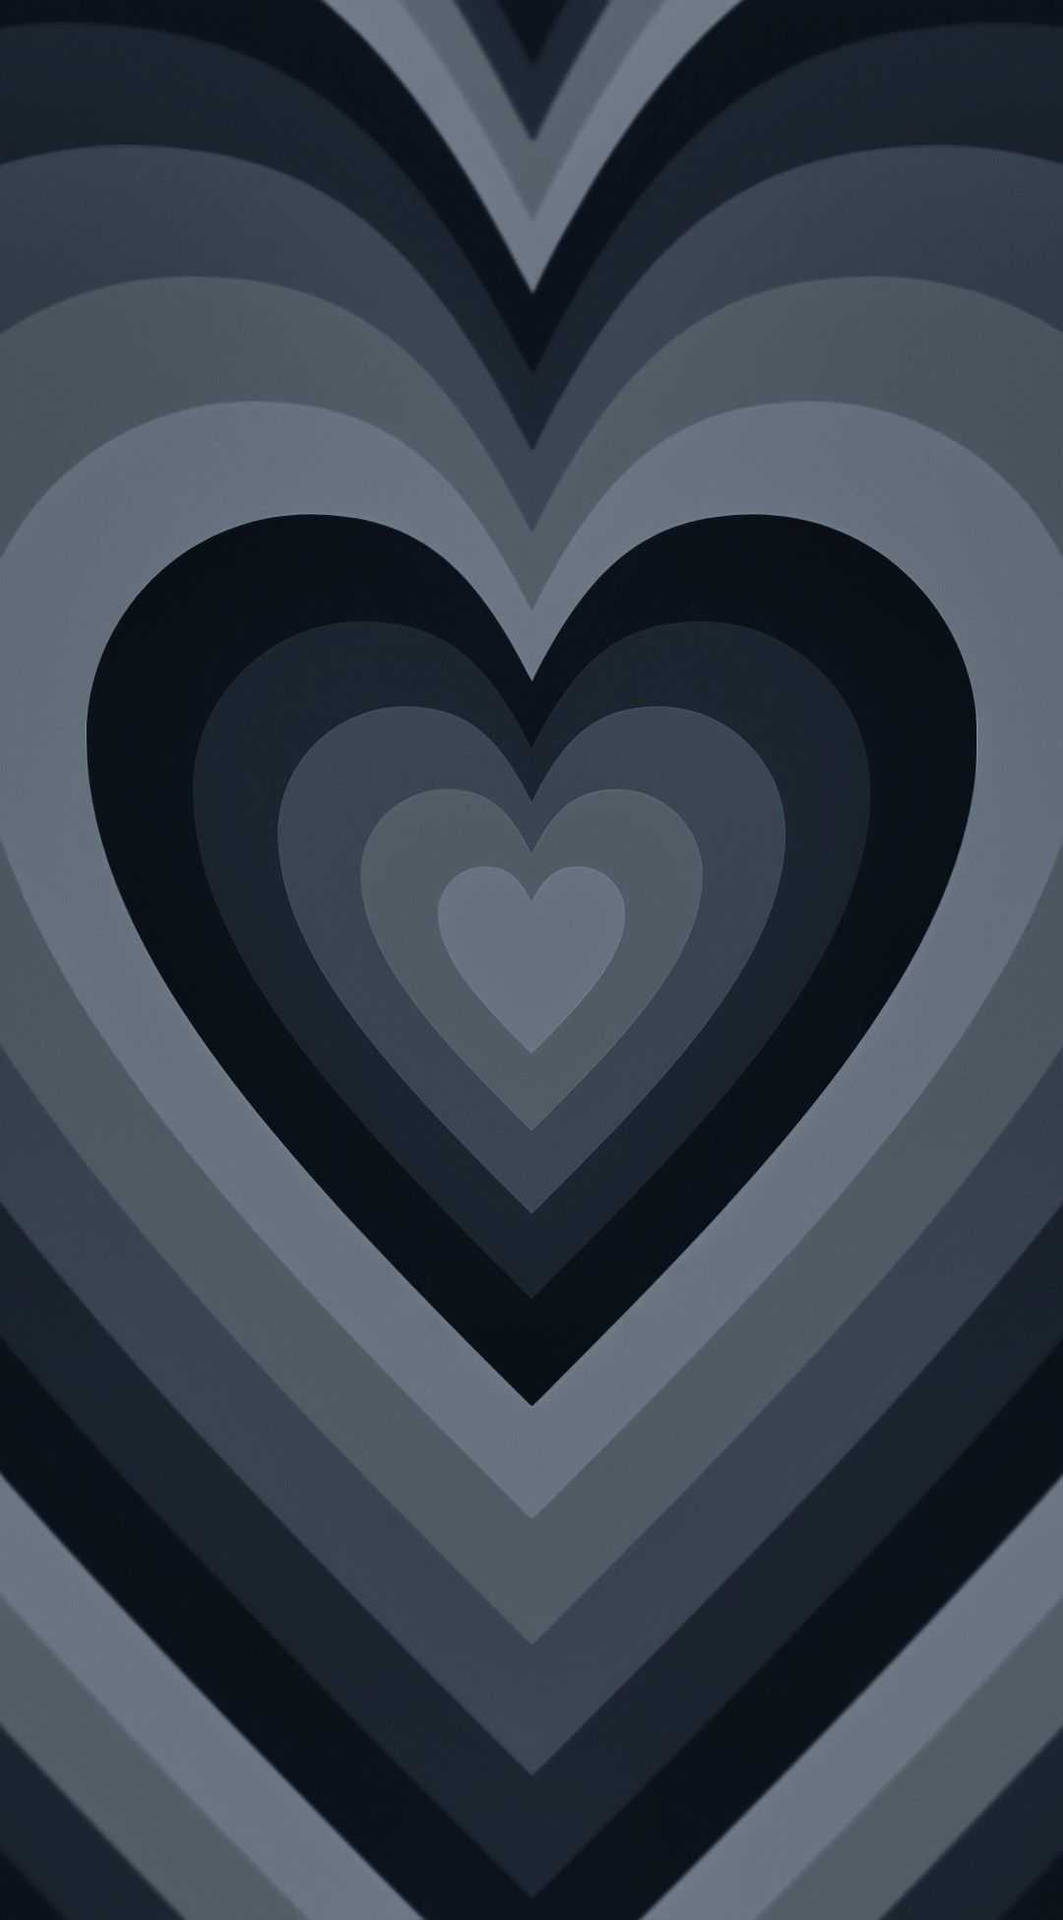 Top 999+ Wildflower Heart Wallpaper Full HD, 4K✅Free to Use